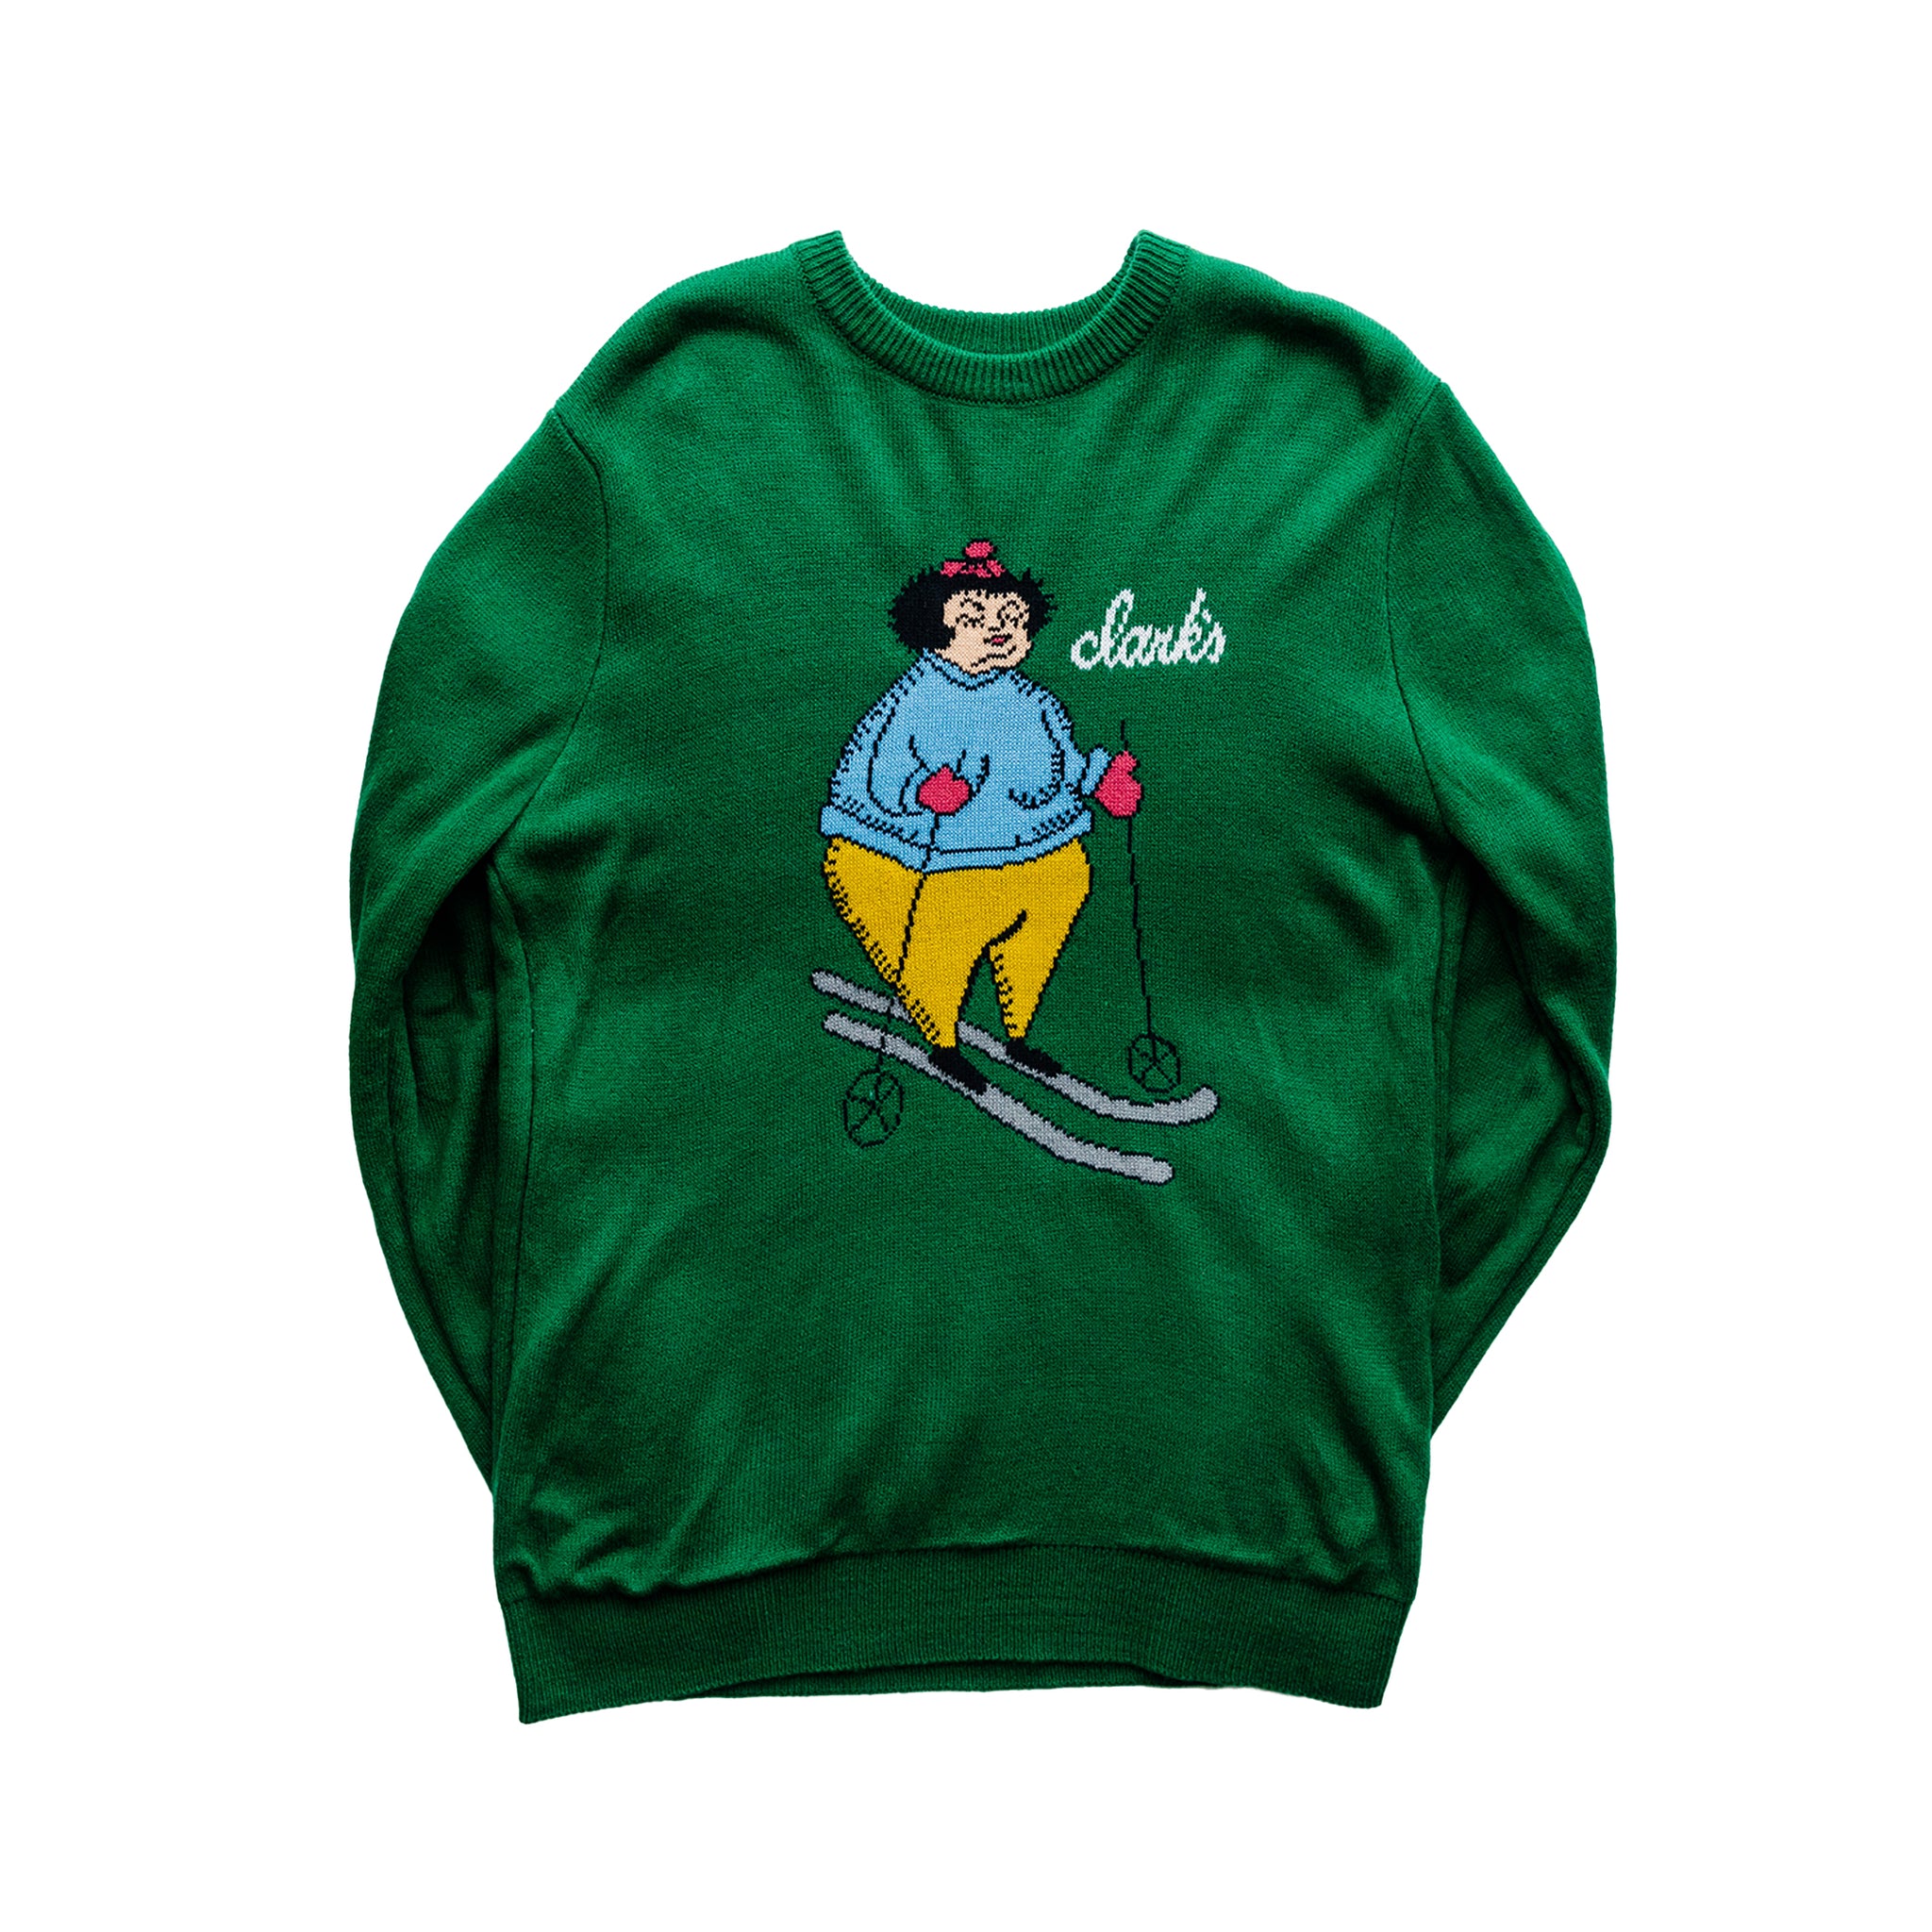 Clark's Aspen Skier Sweater